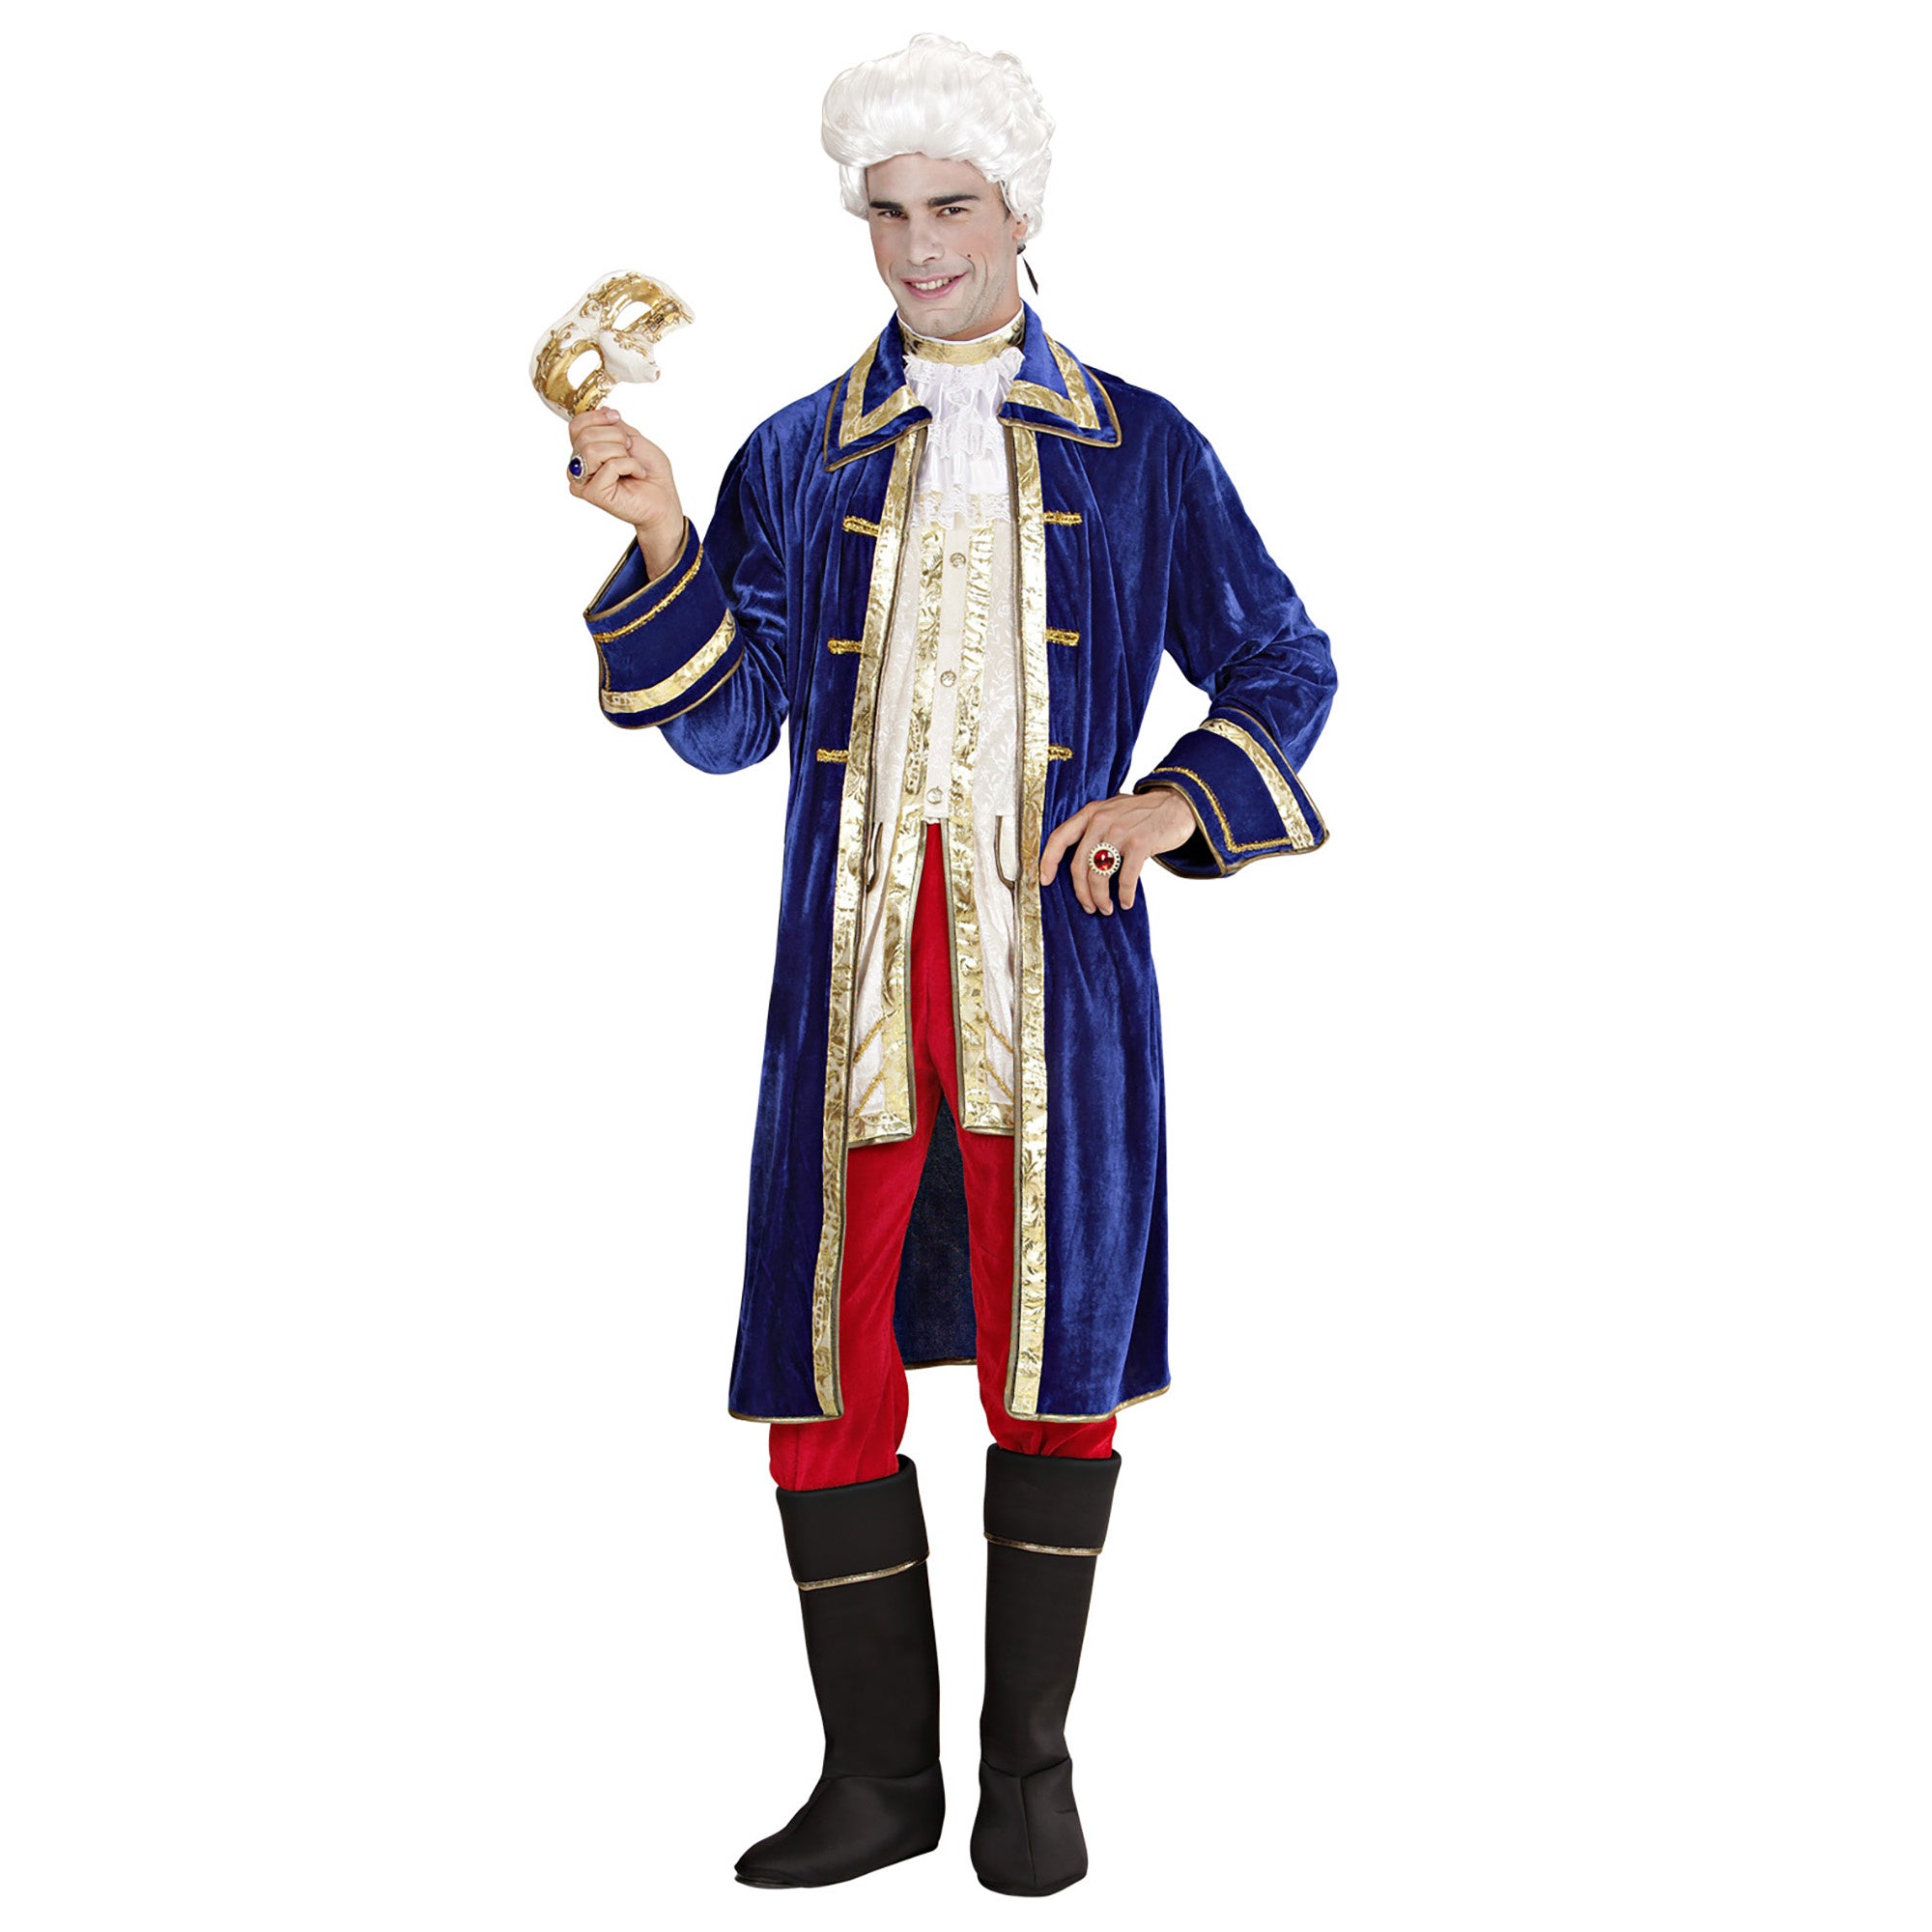 Widmann - Middeleeuwen & Renaissance Kostuum - Giacomo Casanova, Fluweel Kostuum Man - blauw,rood - Medium - Carnavalskleding - Verkleedkleding